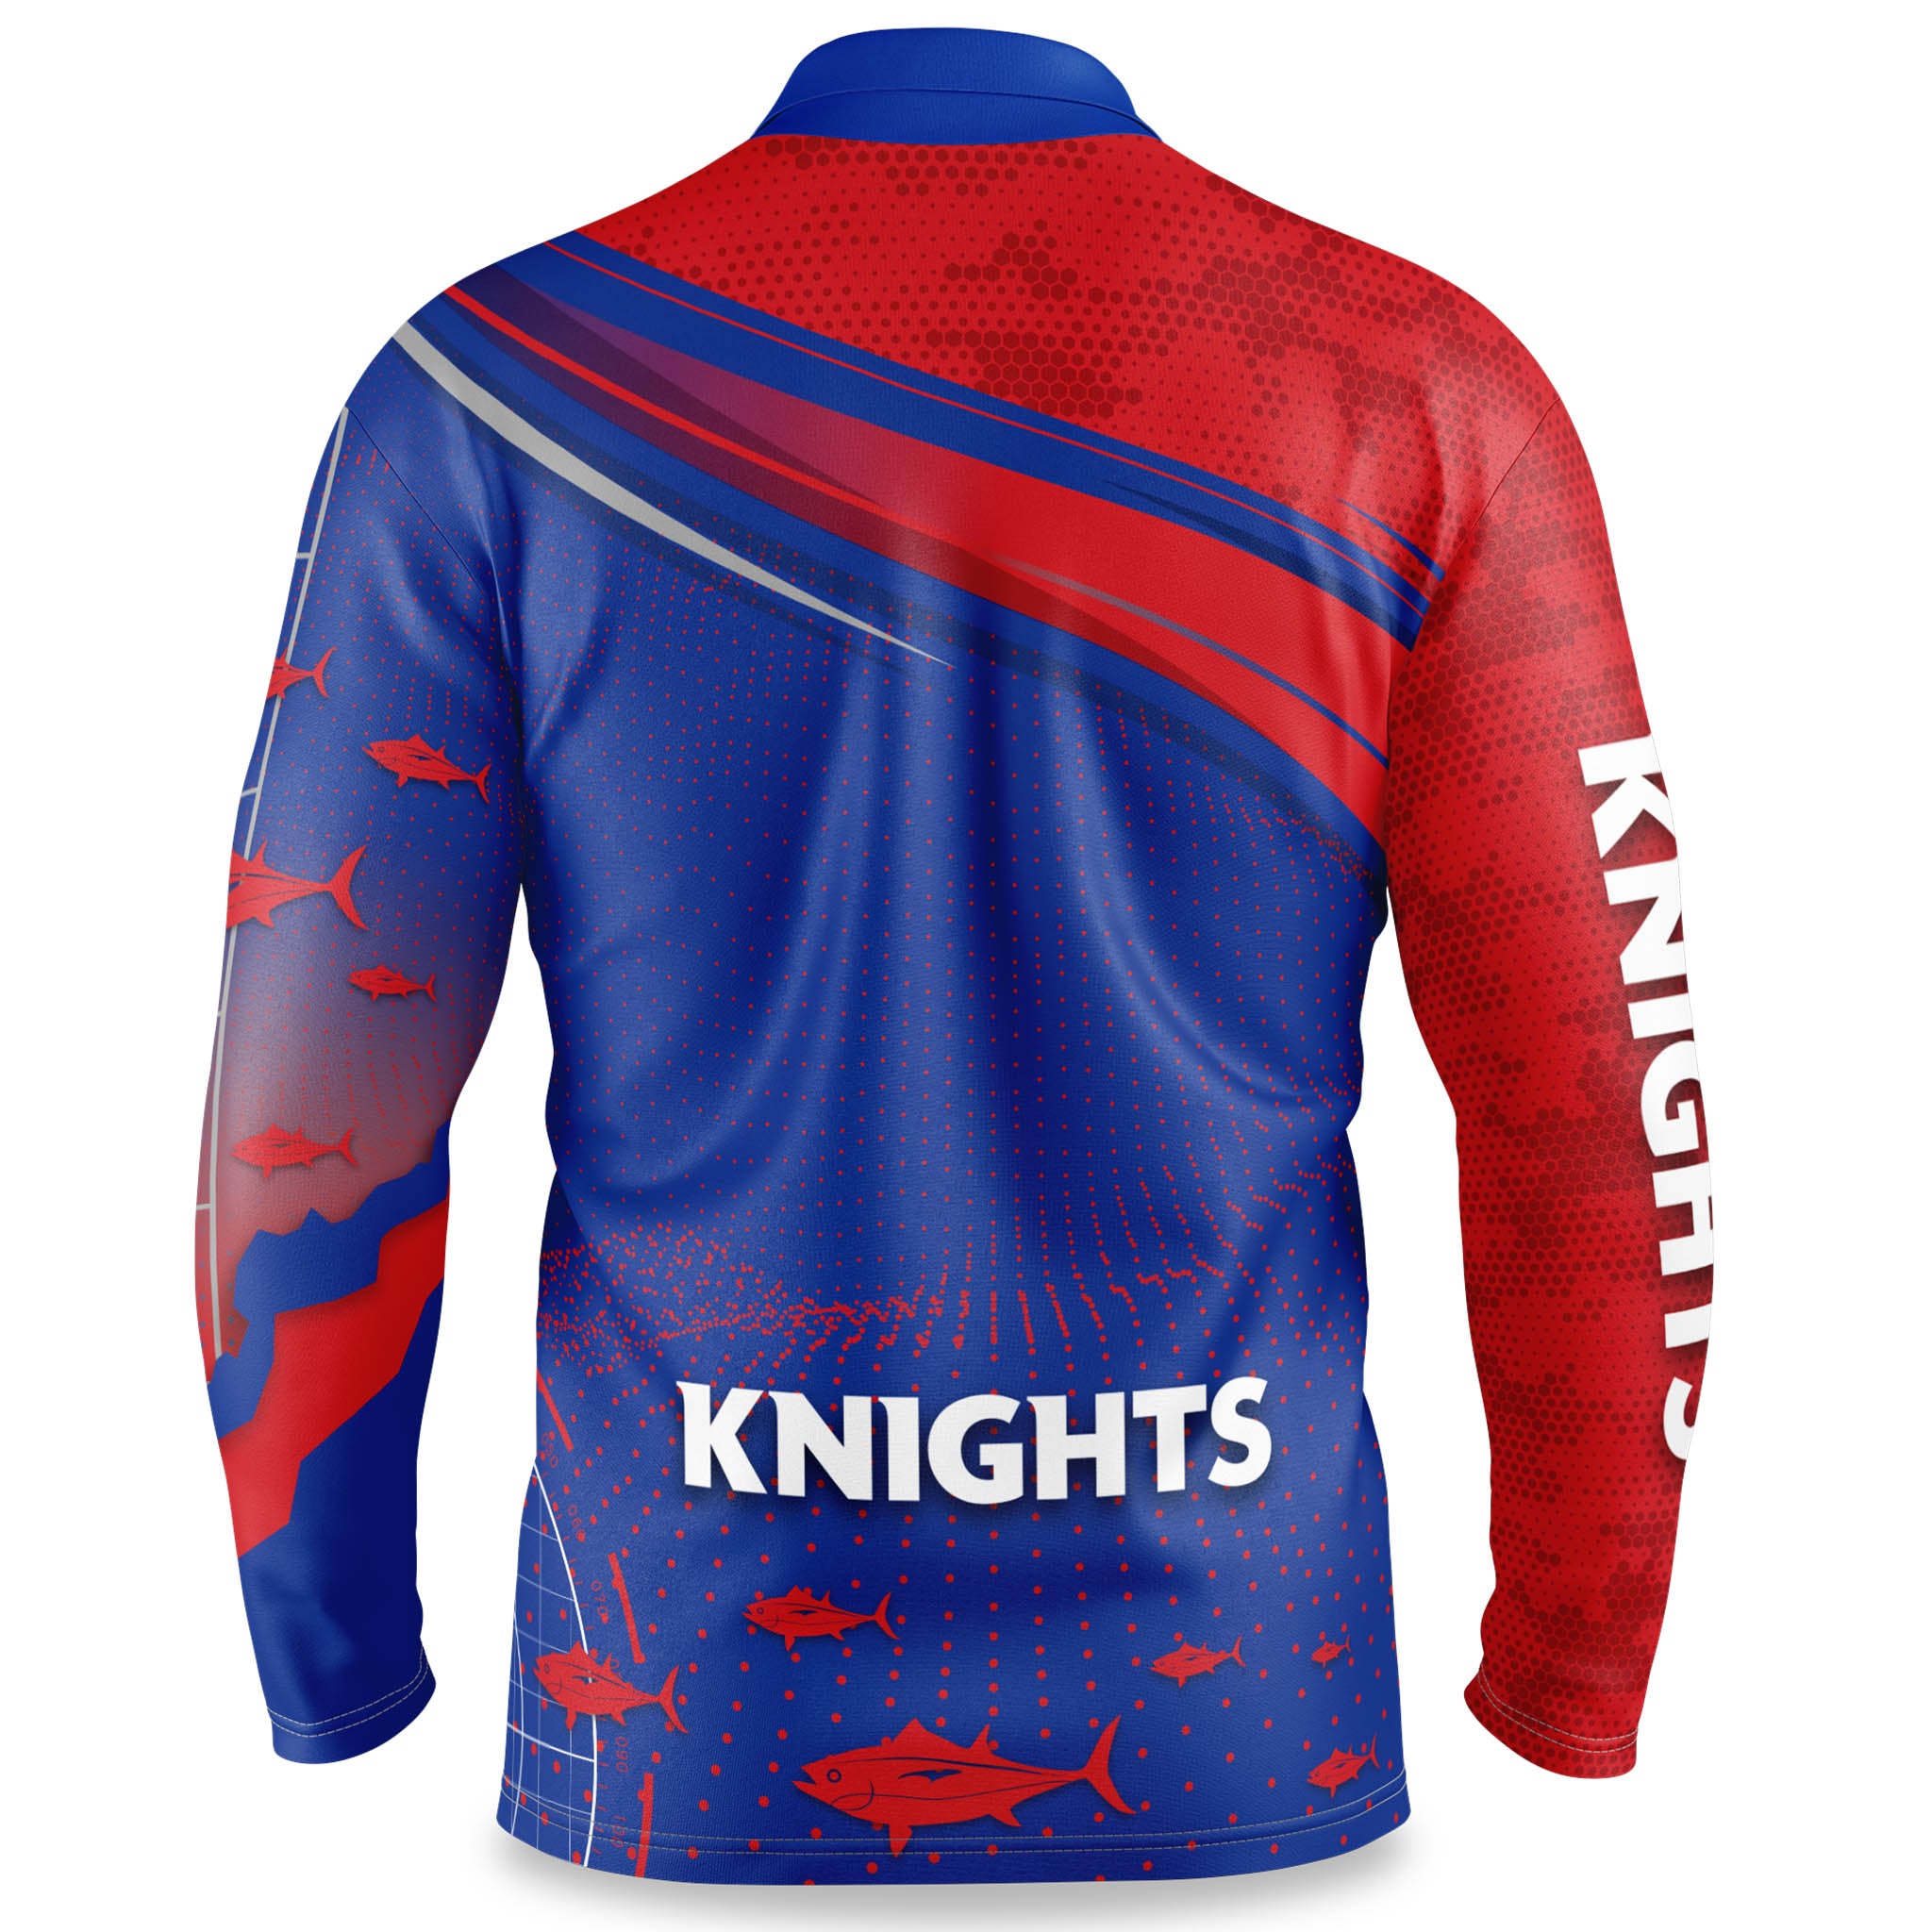 Knights Fishfinder Fishing Shirt - The Rugby Shop Darwin